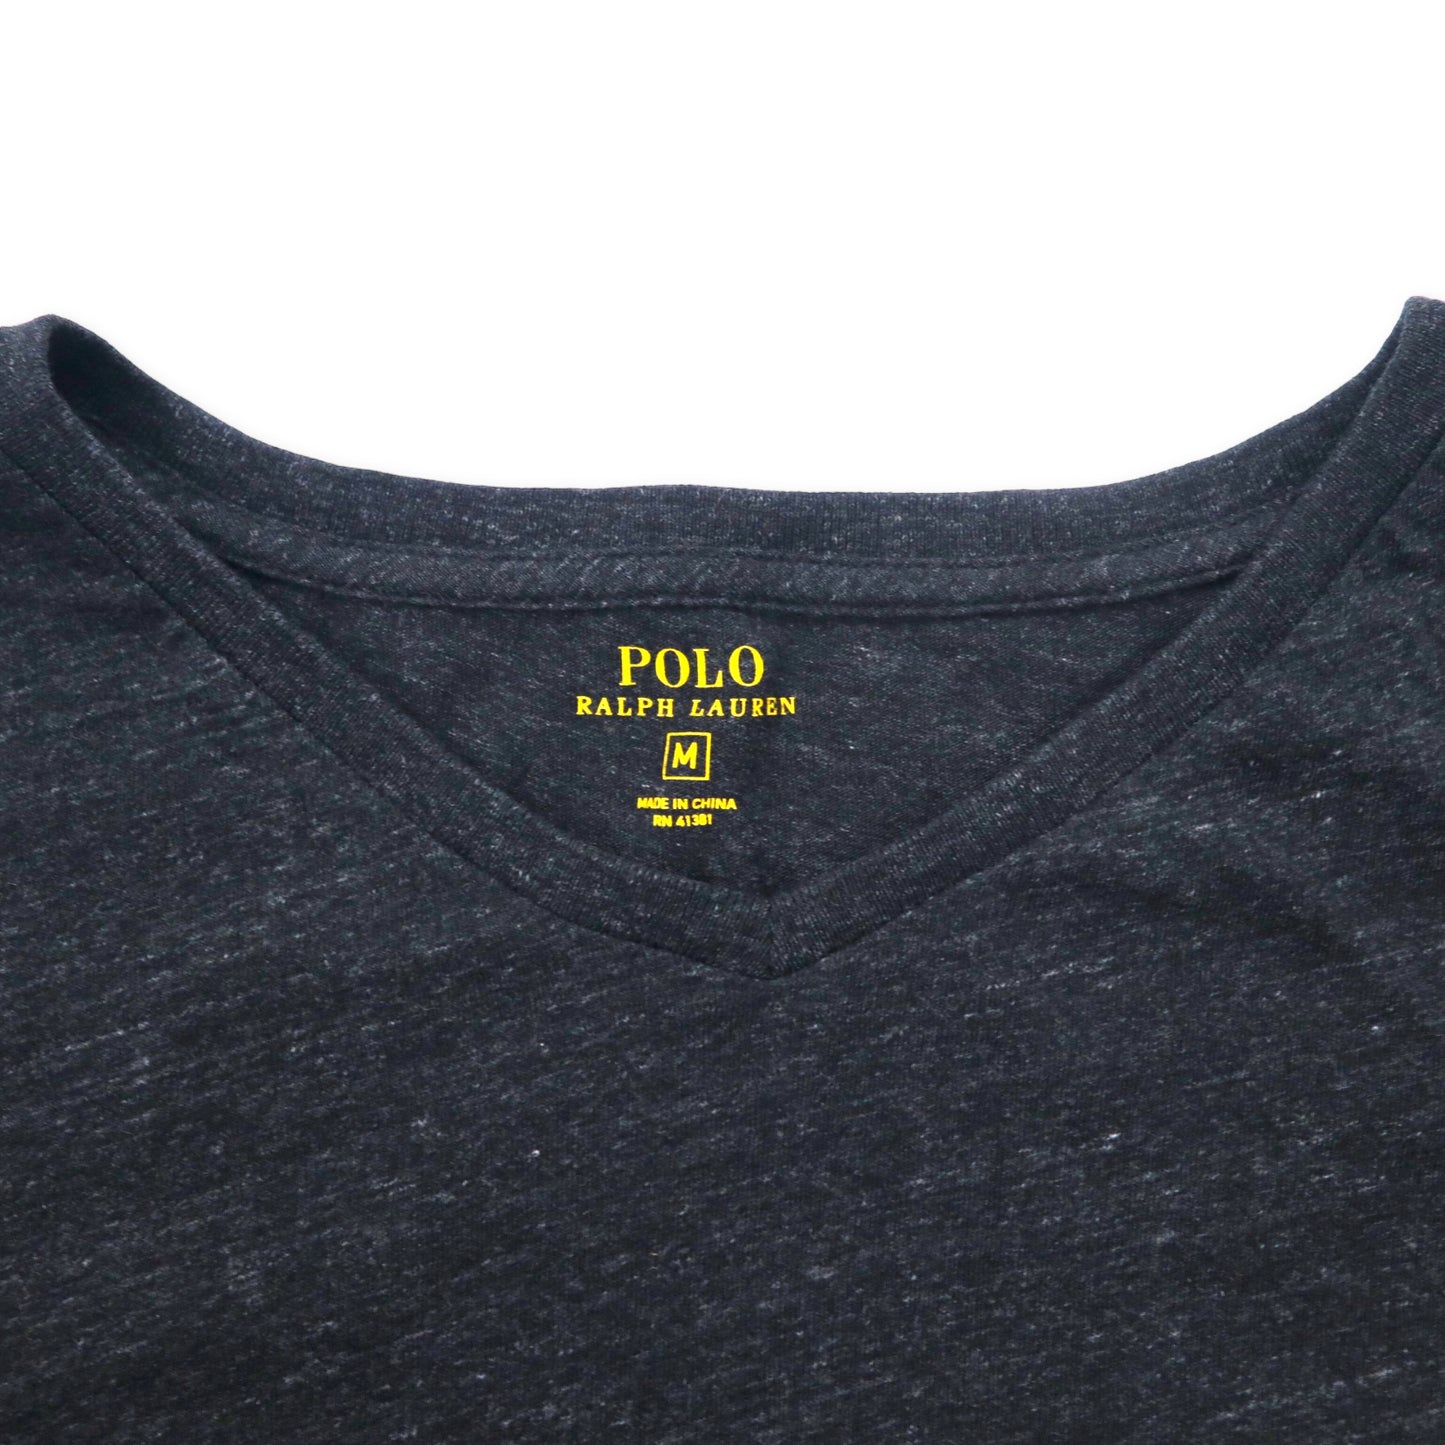 POLO RALPH LAUREN Vネック ロングスリーブ Tシャツ ロンT M グレー コットン スモールポニー刺繍